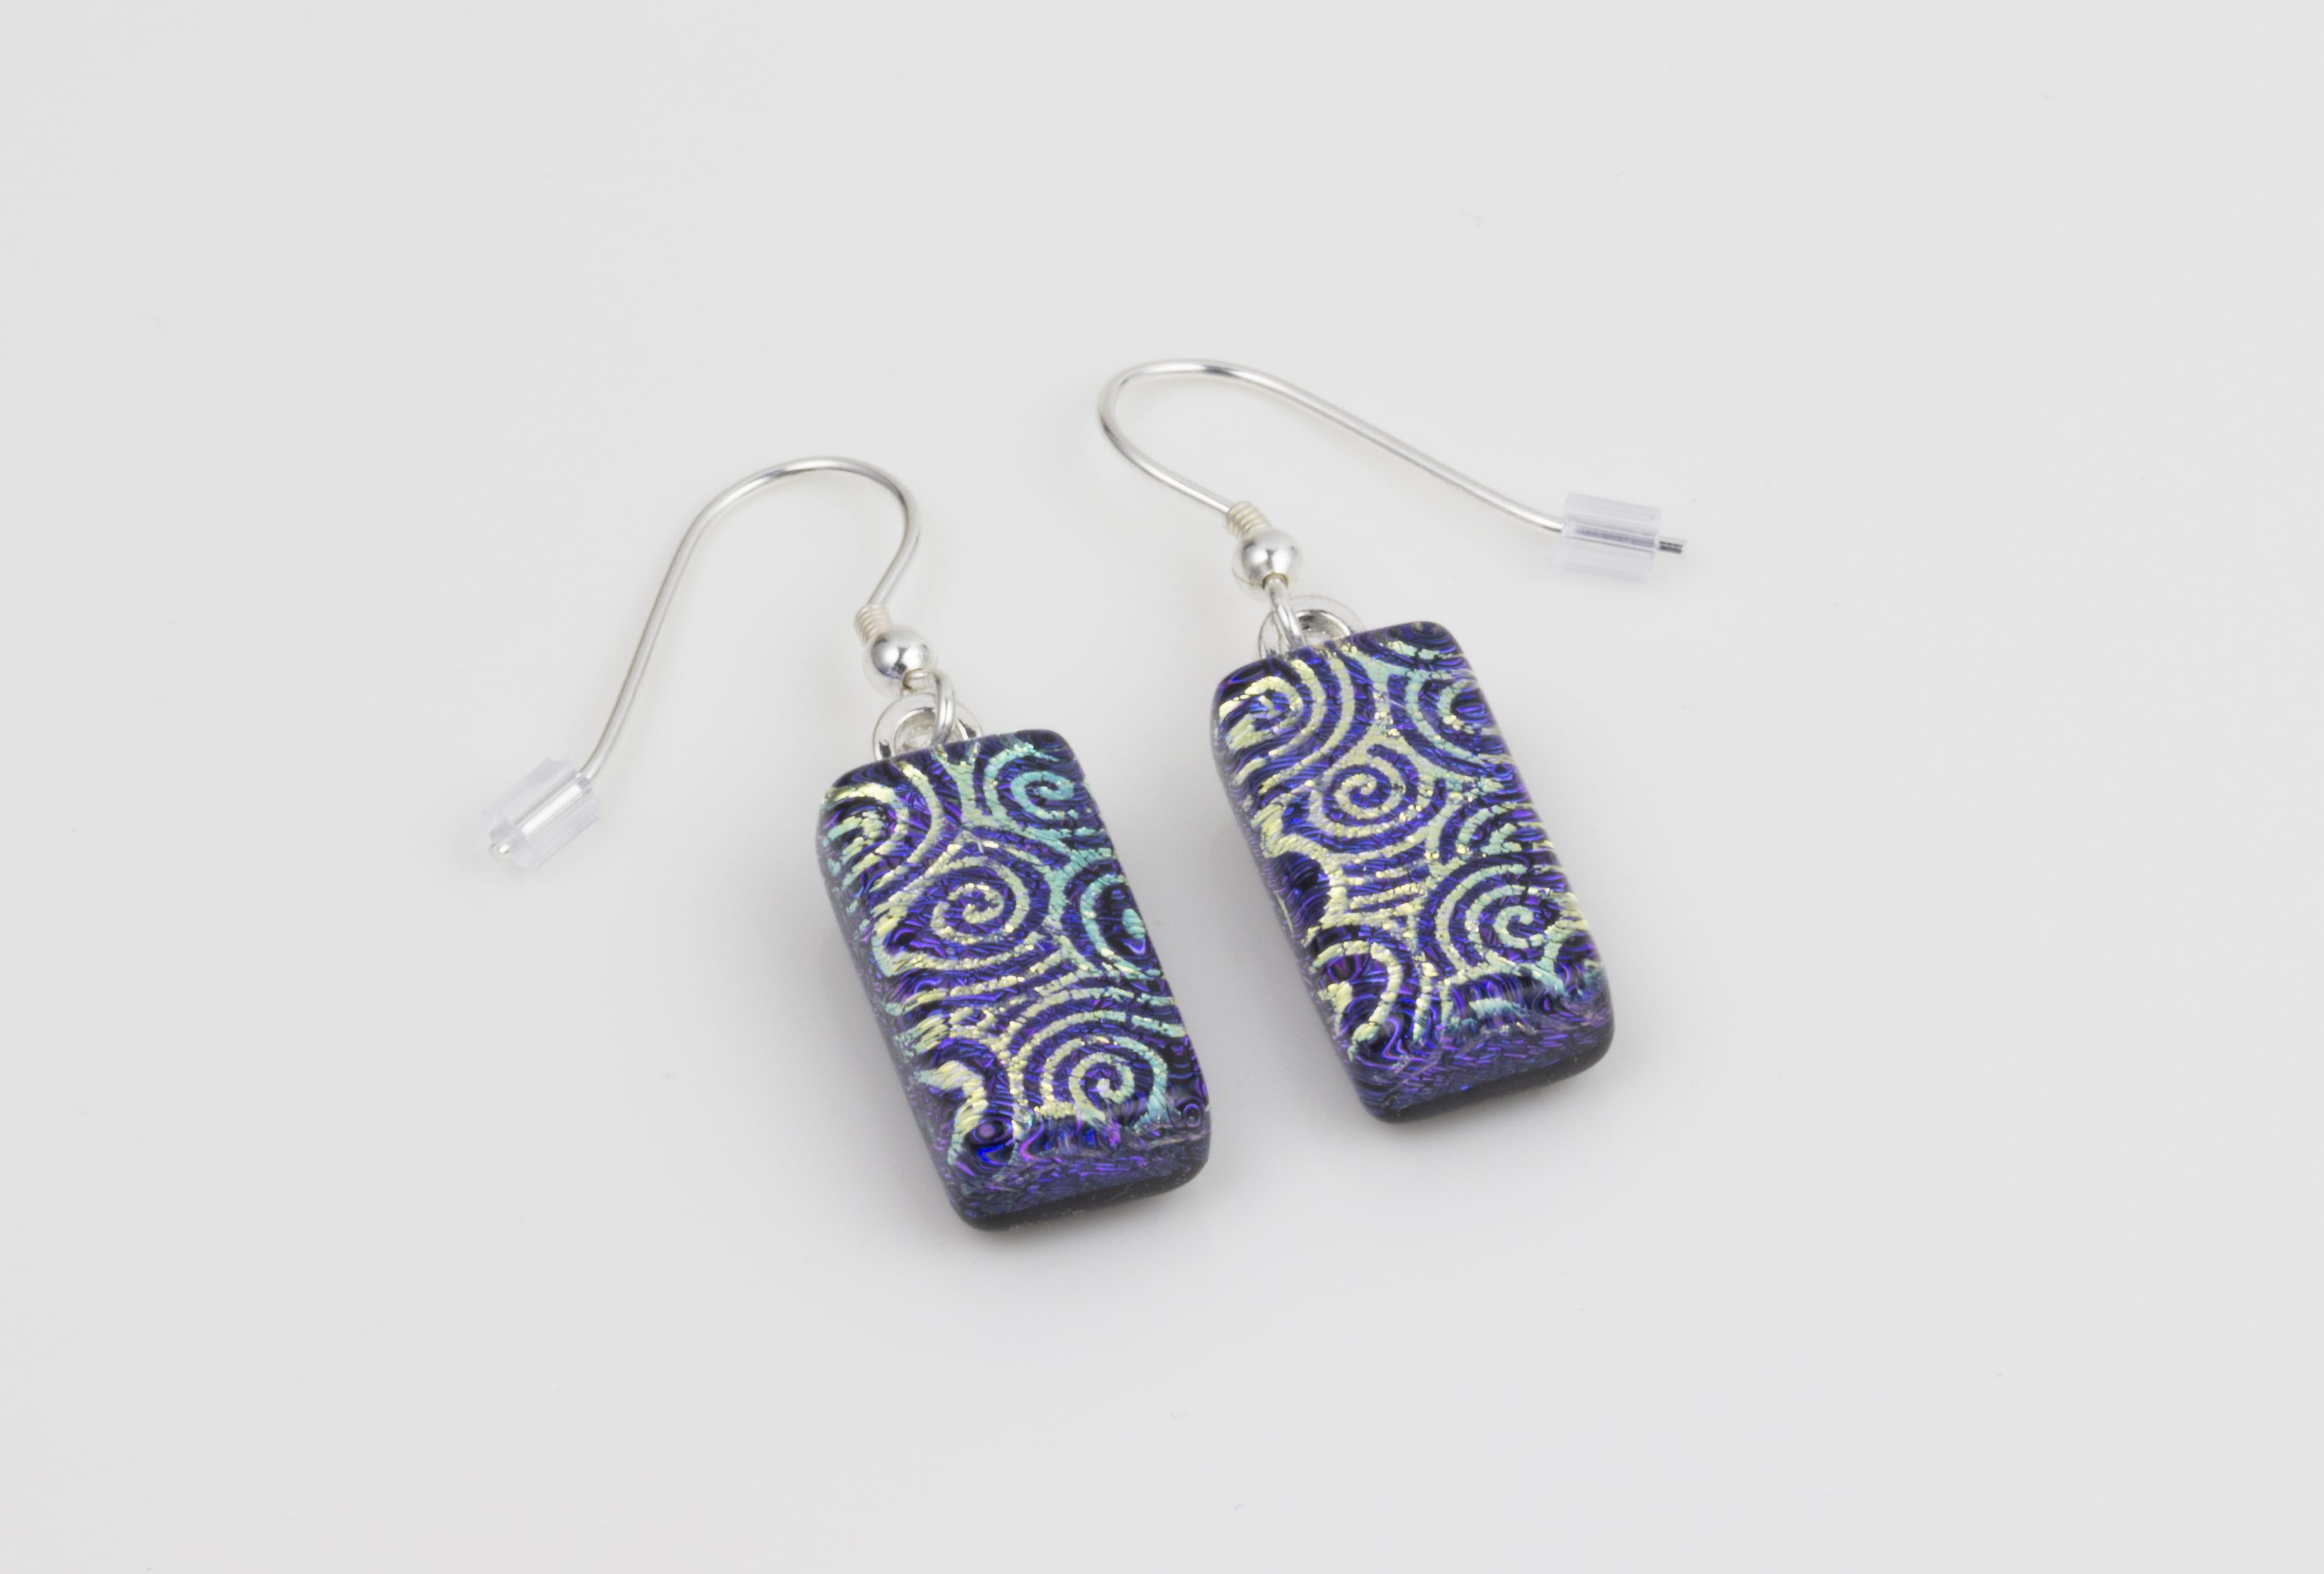 Dichroic glass jewellery drop earrings,purple with gold pattern glass drop earrings, art glass earrings handmade in Shropshire, sterling silver hooks